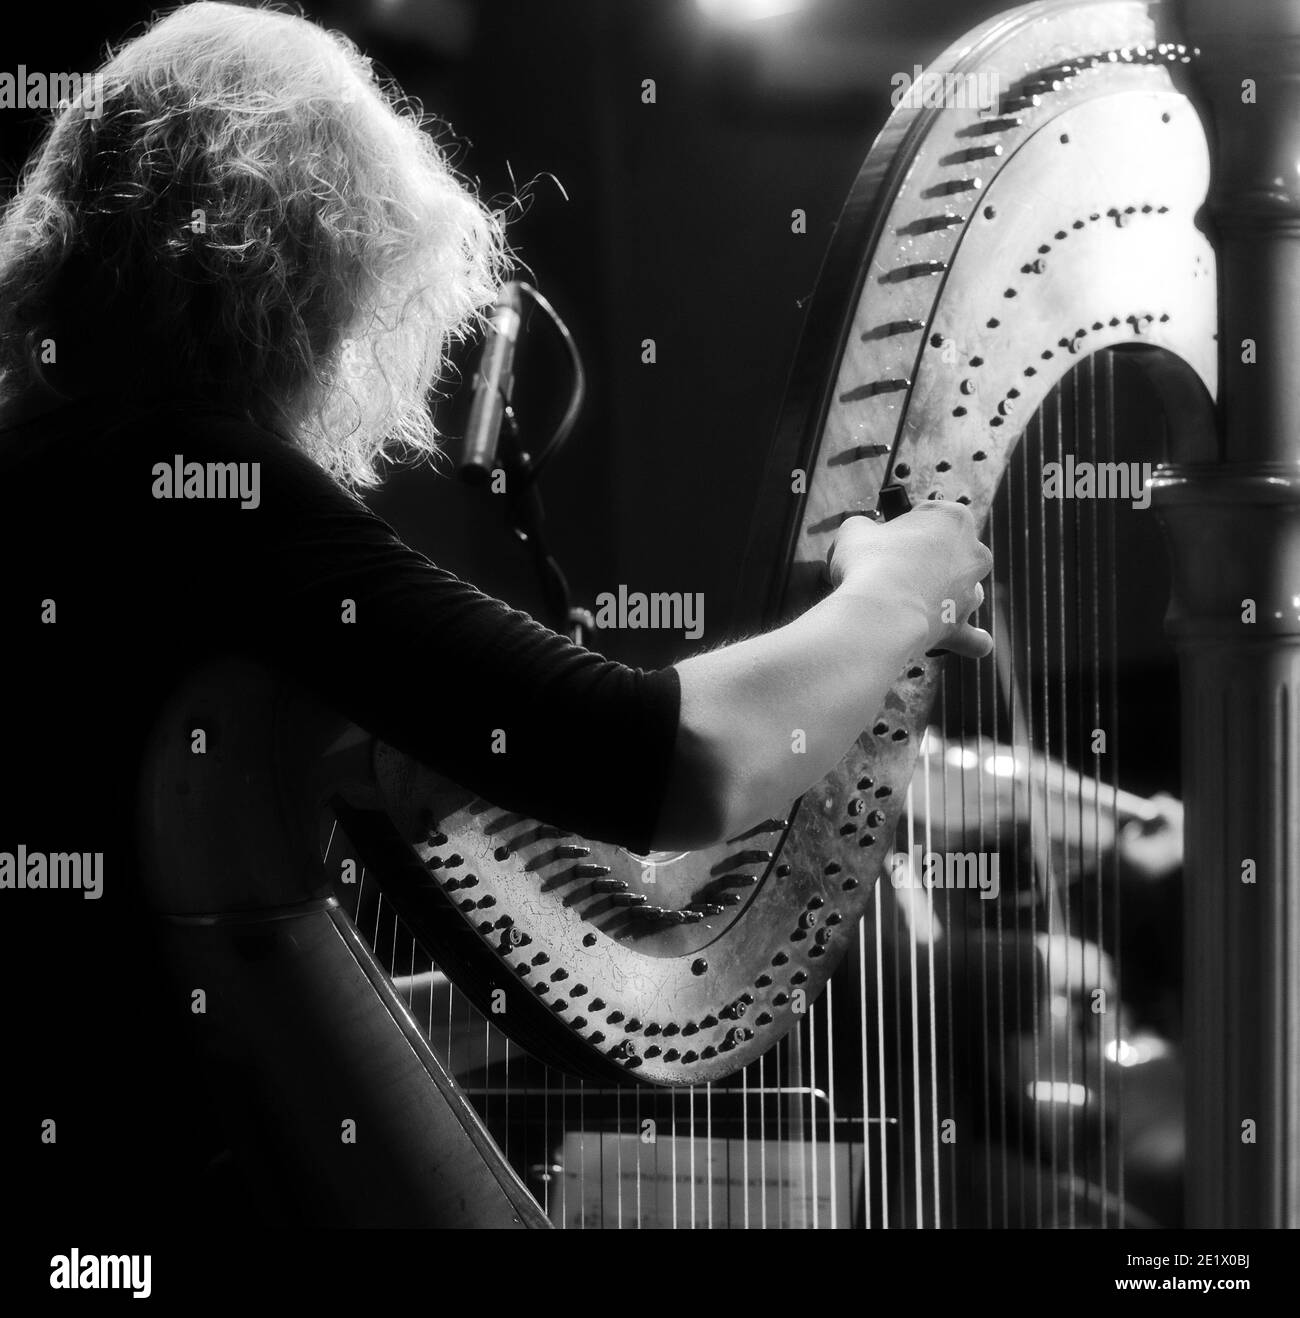 The musician tweaks the harp. Harp player. Classical musician harpist playing harp. Female musician playing the harp. Stock Photo